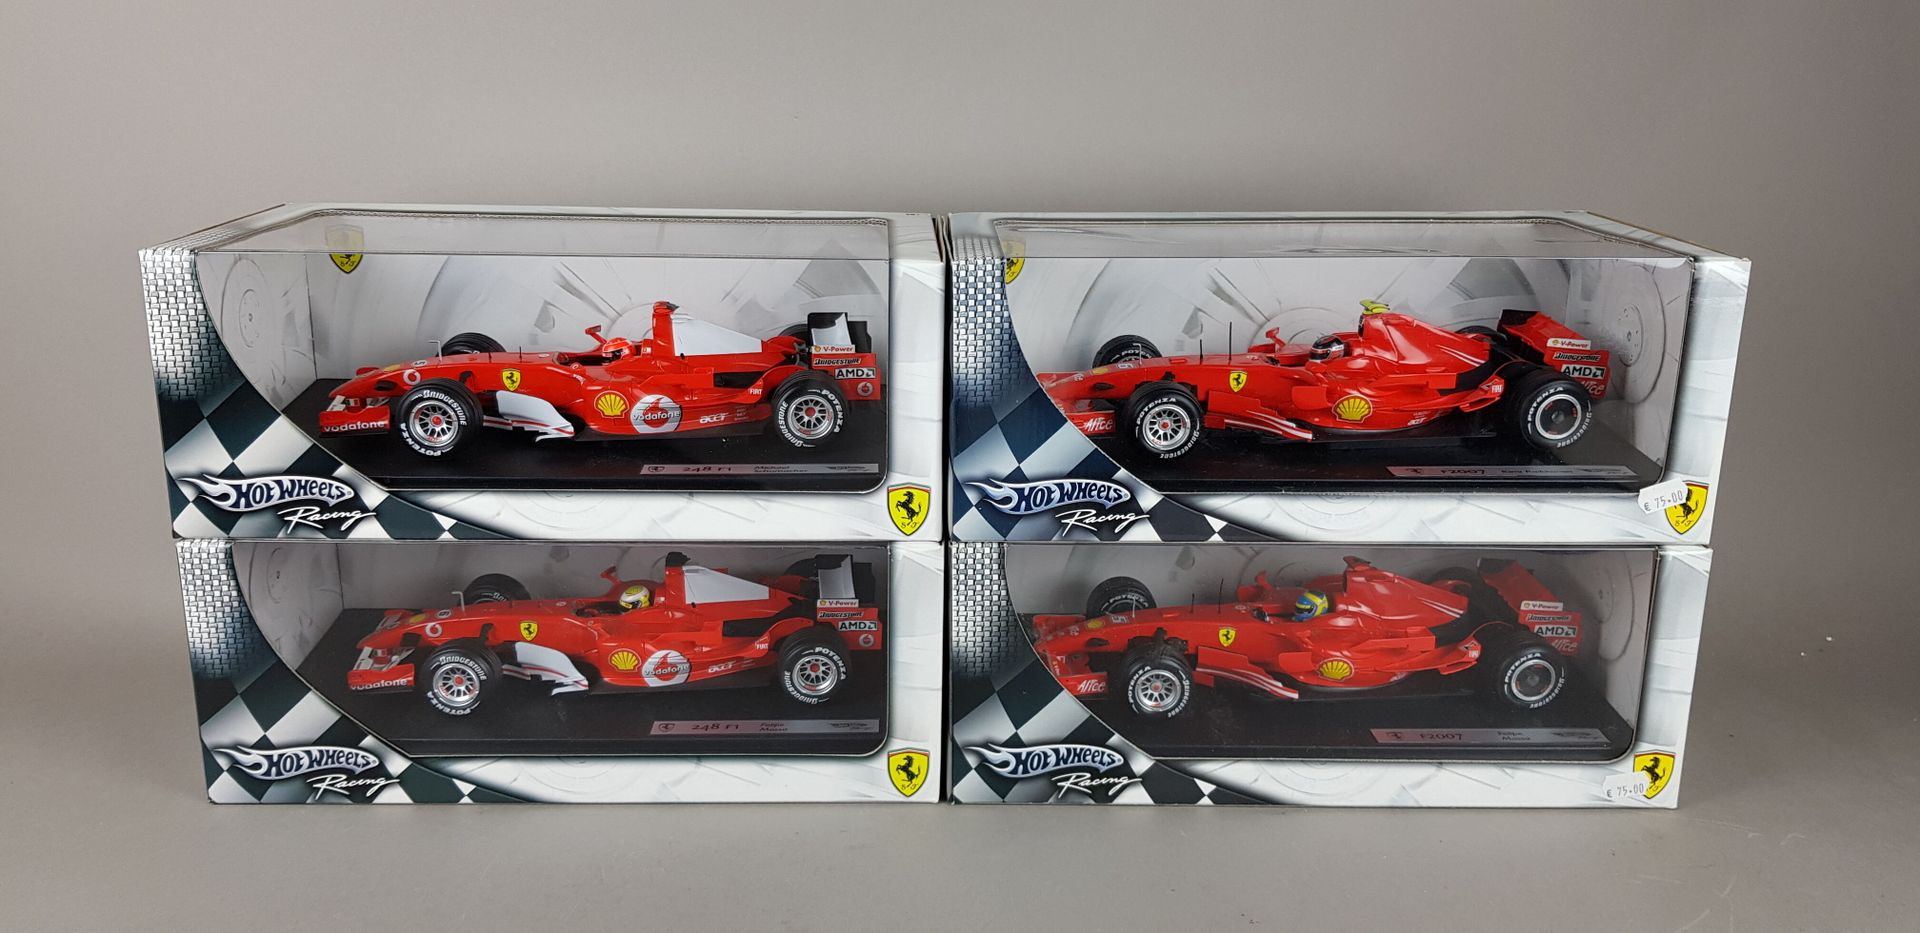 Null HOT WHEELS - FOUR Ferrari im Maßstab 1:18:

1x F2007 Felipe Massa 

1x 248 &hellip;